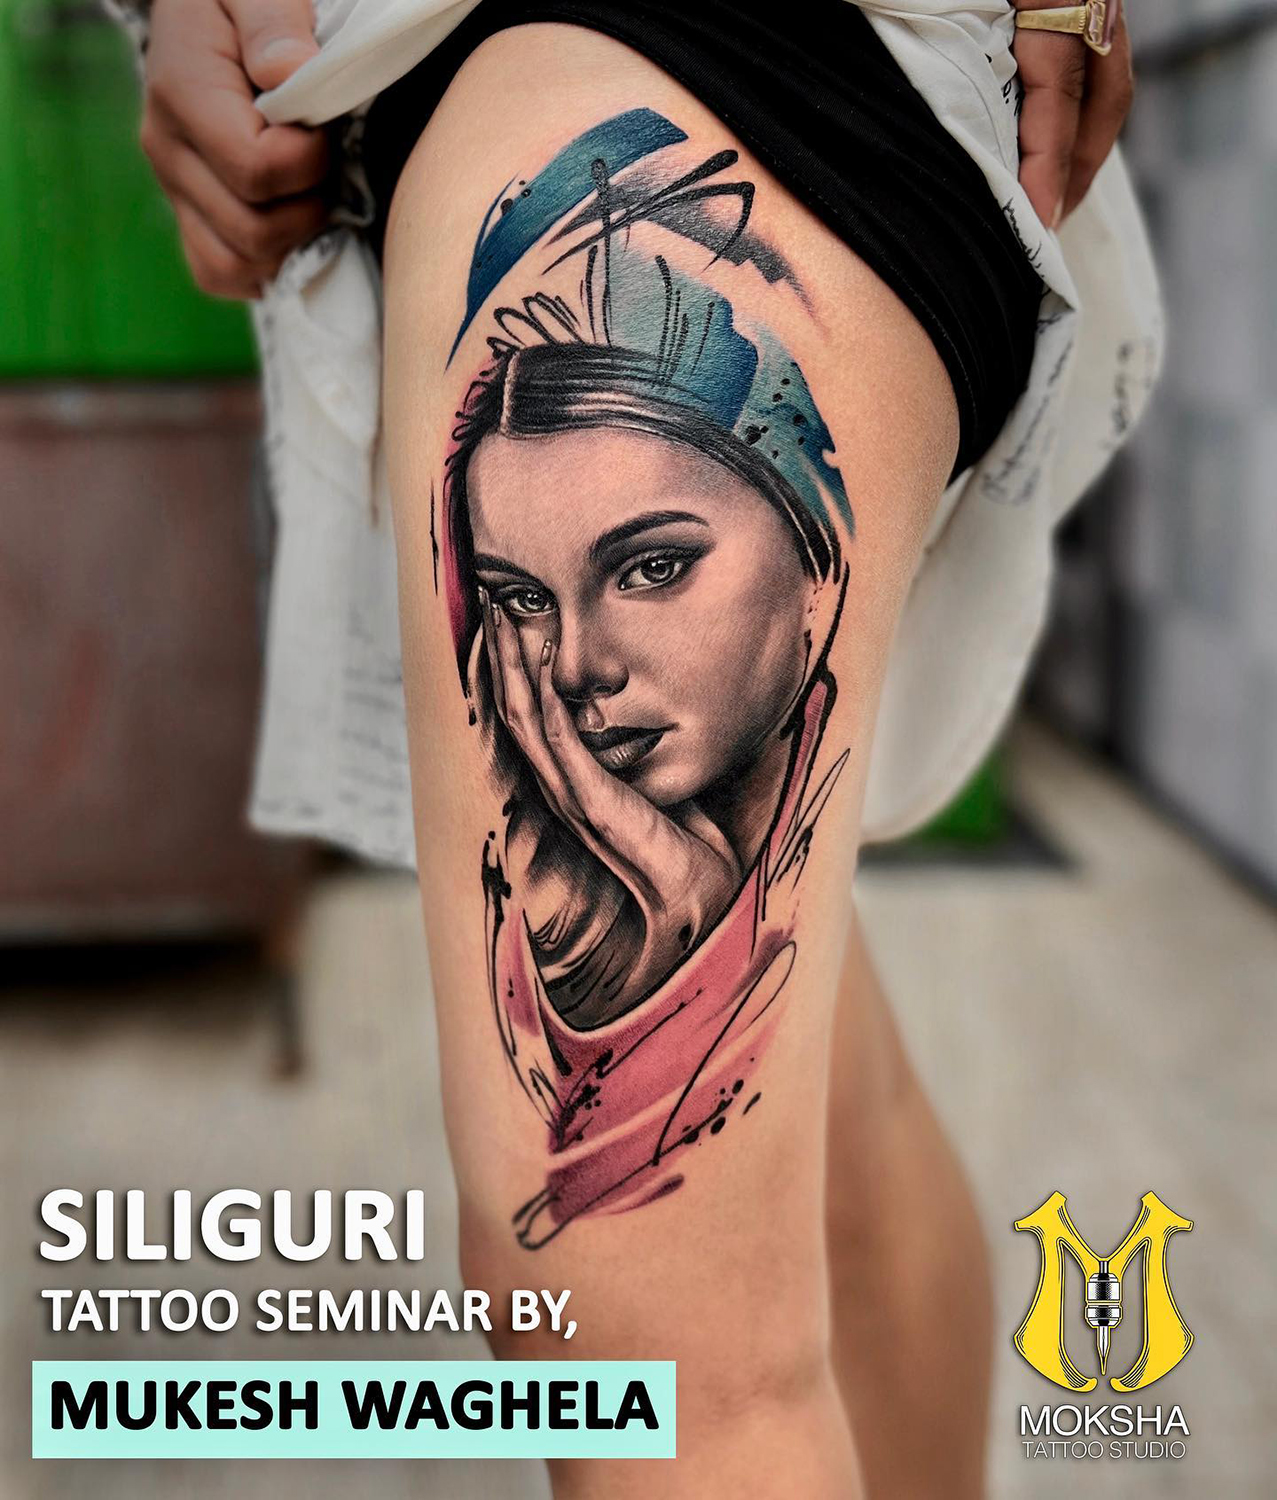 Valkyrie Tattoo By Mukesh Waghela The Best Tattoo Artist In Goa at Moksha  Tattoo Studio Goa, India. - Best Tattoo Studio Goa, Safe, Hygienic - Moksha  Tattoo